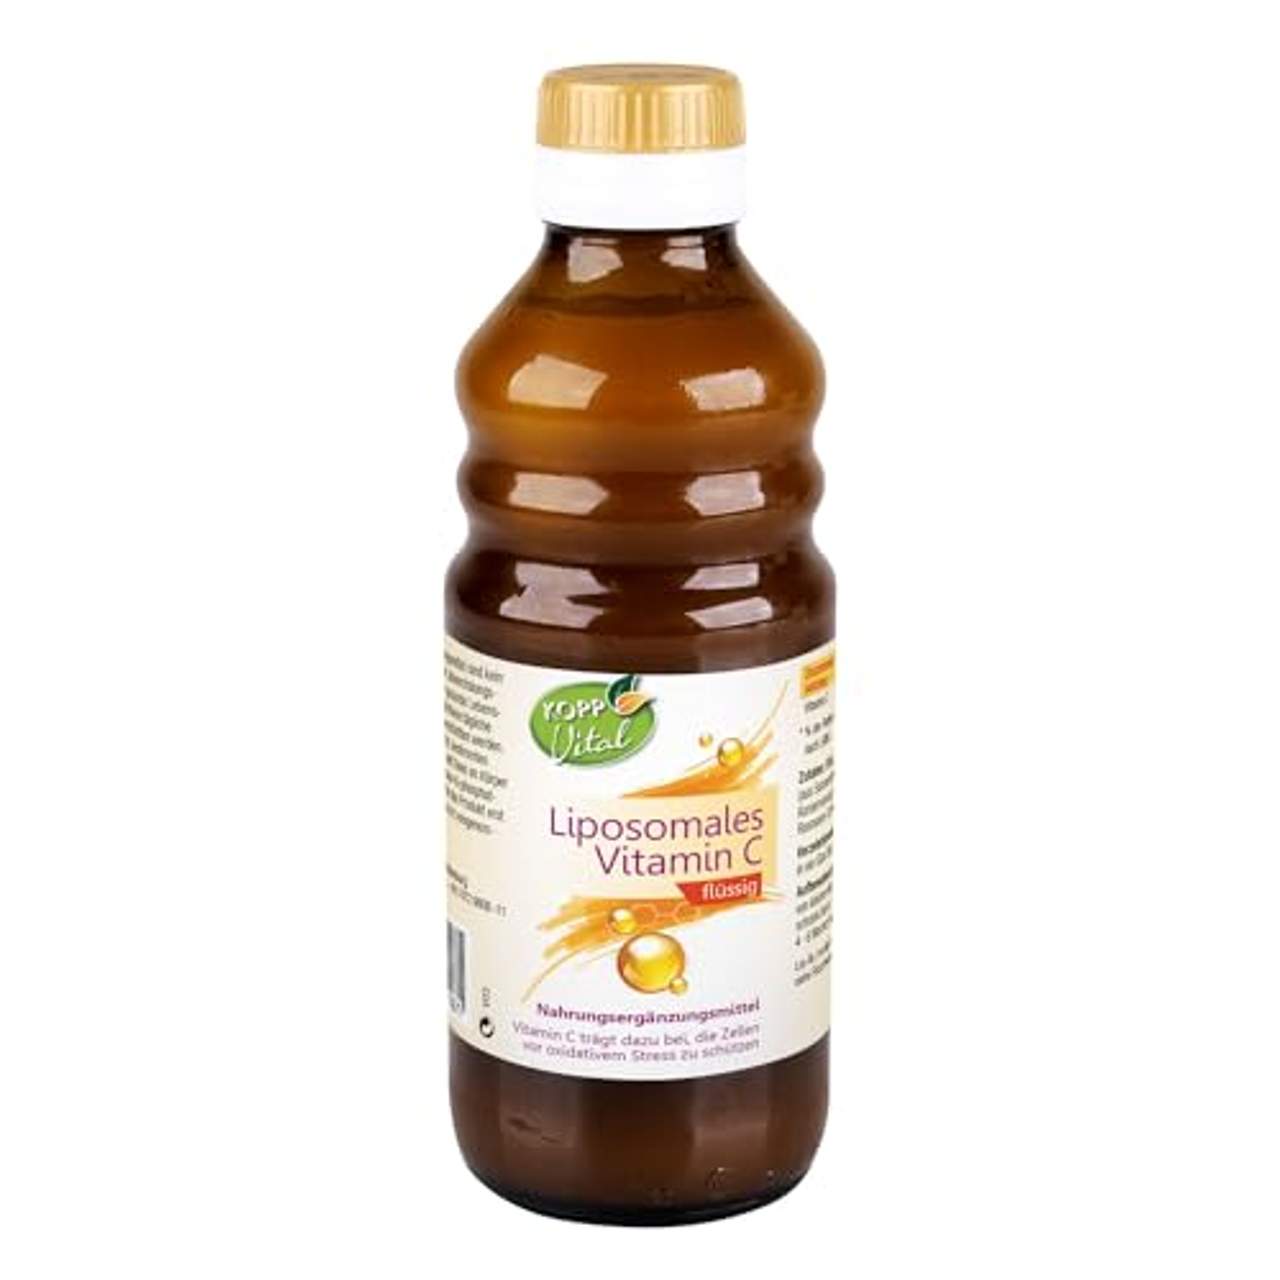 Kopp Vital Liposomales Vitamin C